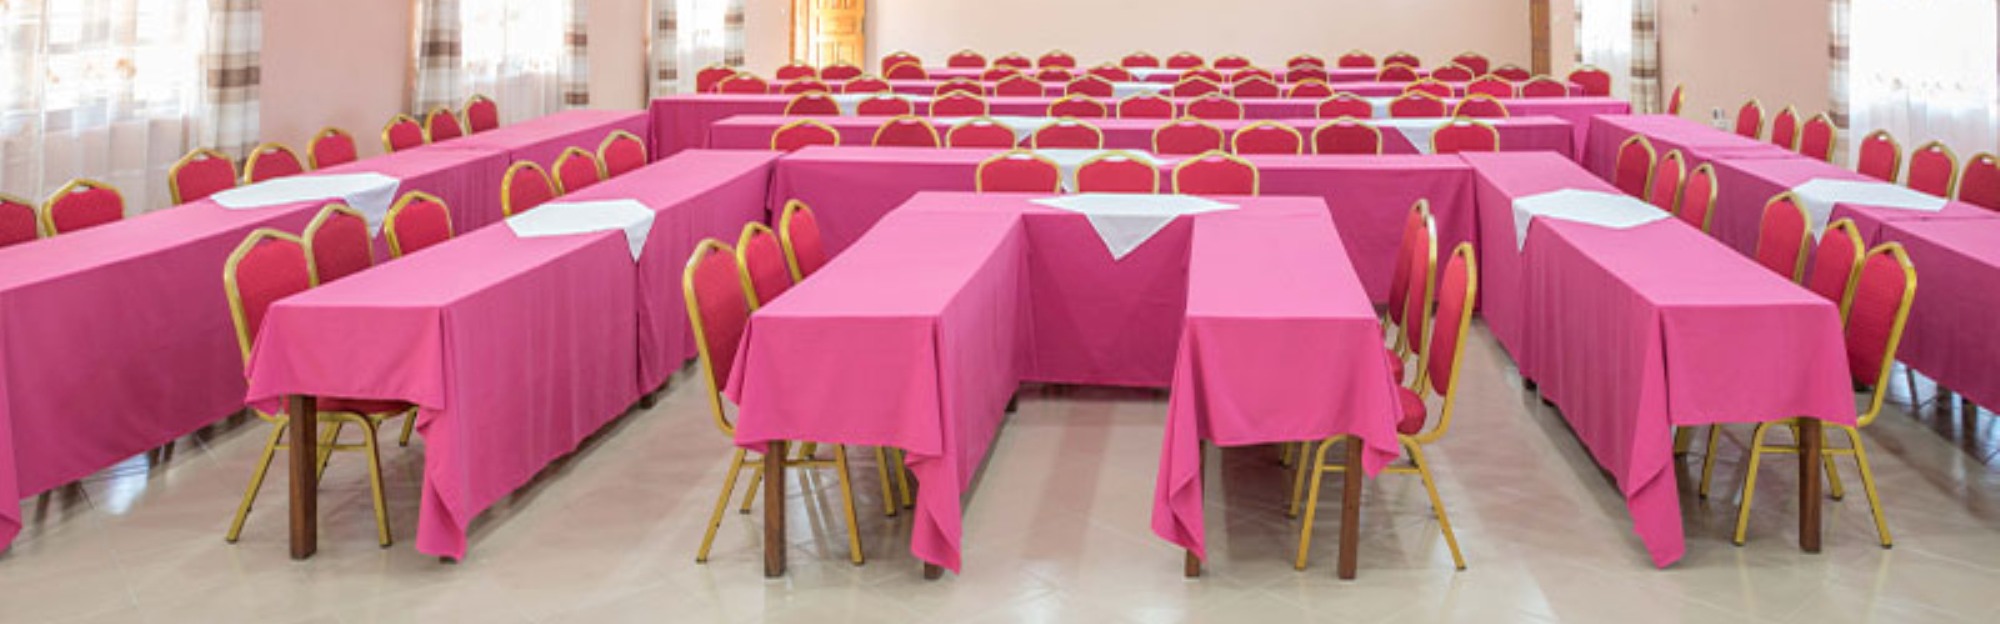 Kontiki Hotel Meetings & Conferences